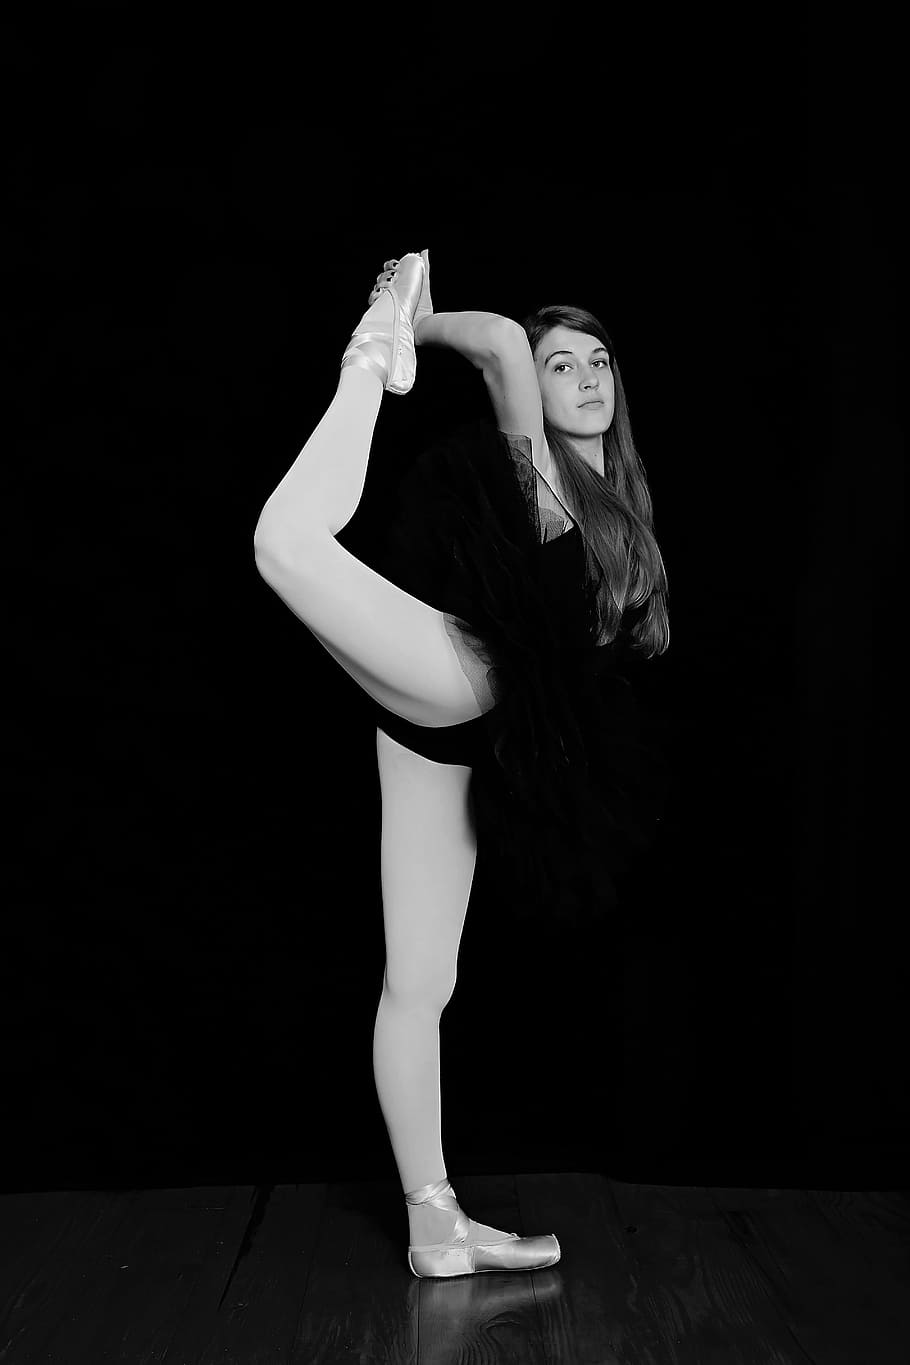 grayscale photography, ballerina, trick, dance, ballet, female, elegance, studio, performing, balance